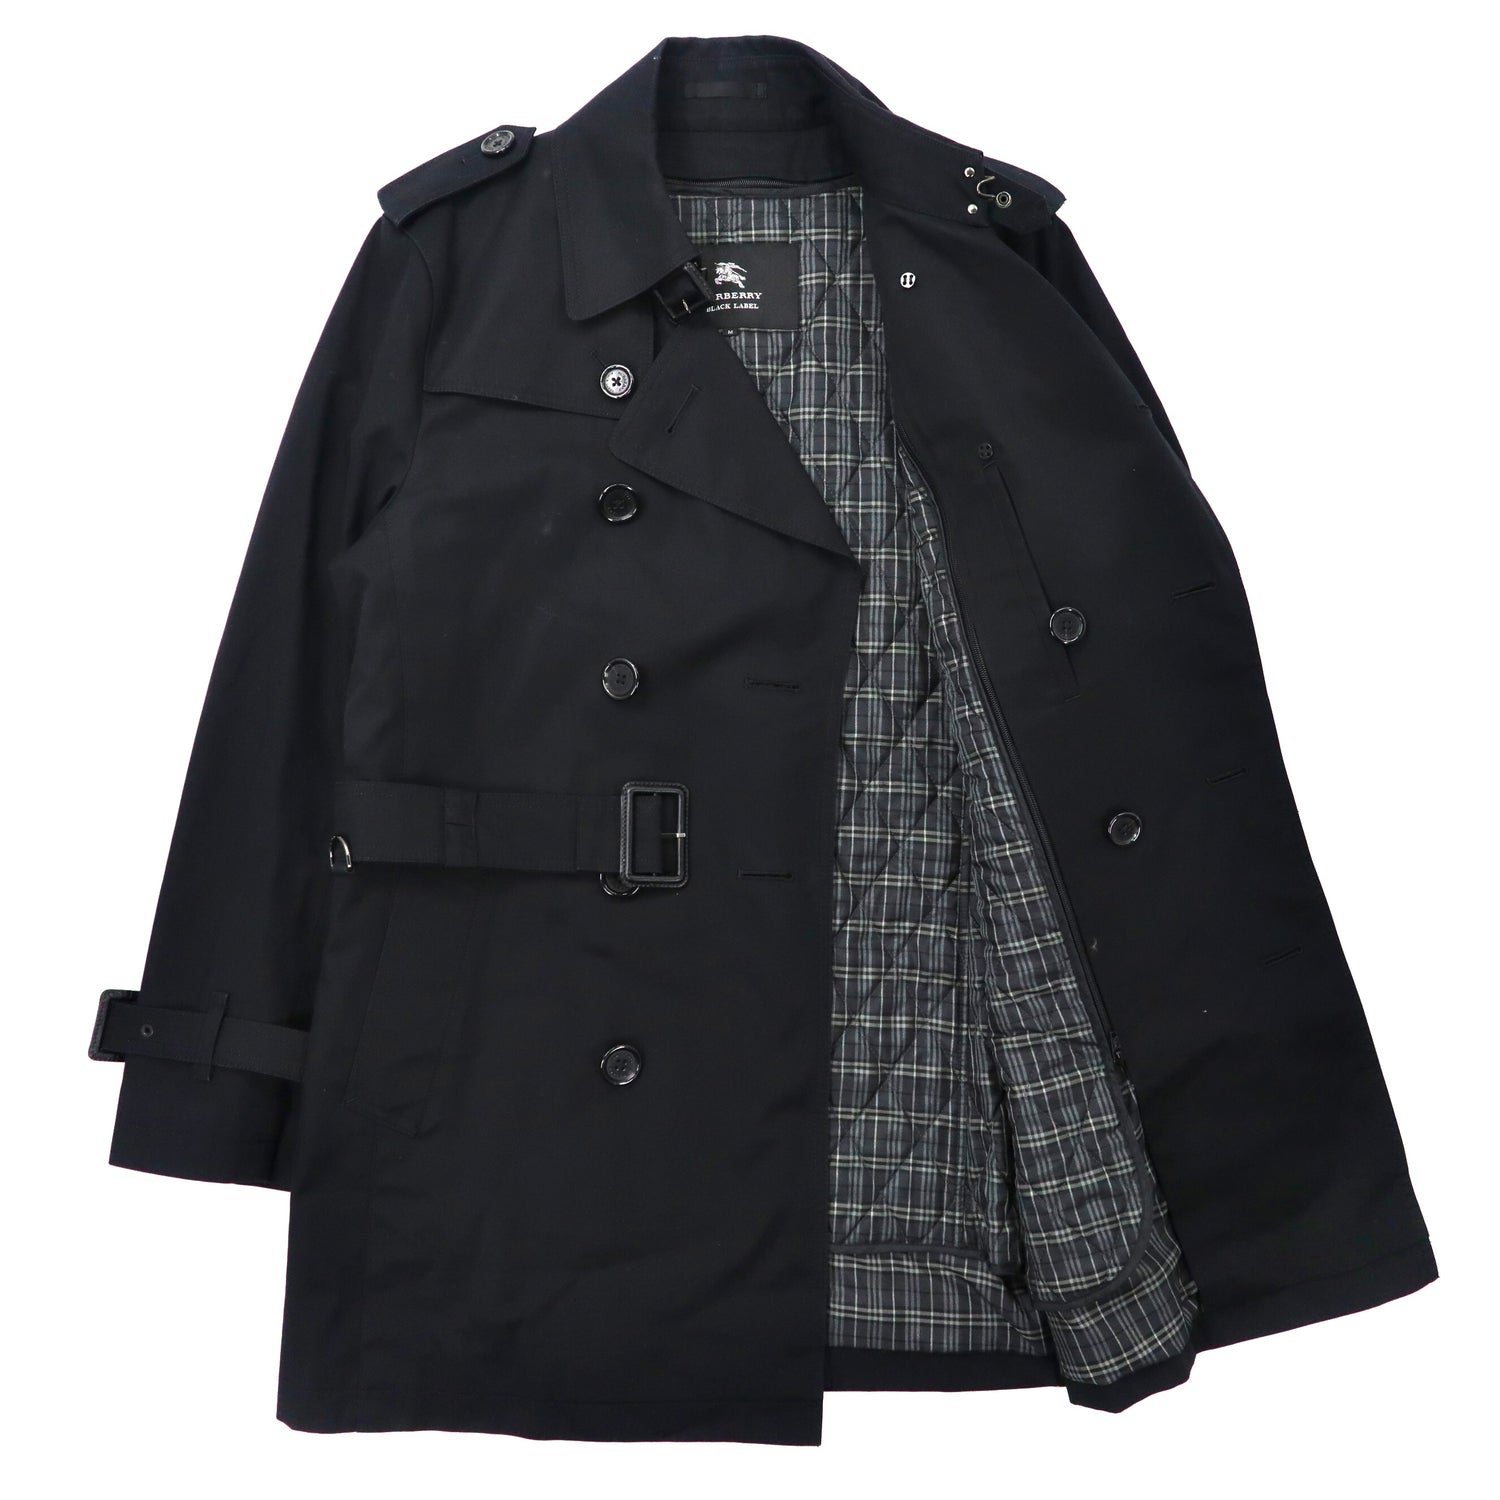 BURBERRY BLACK LABEL Coat M Black Cotton Cotton CHECKED Liner